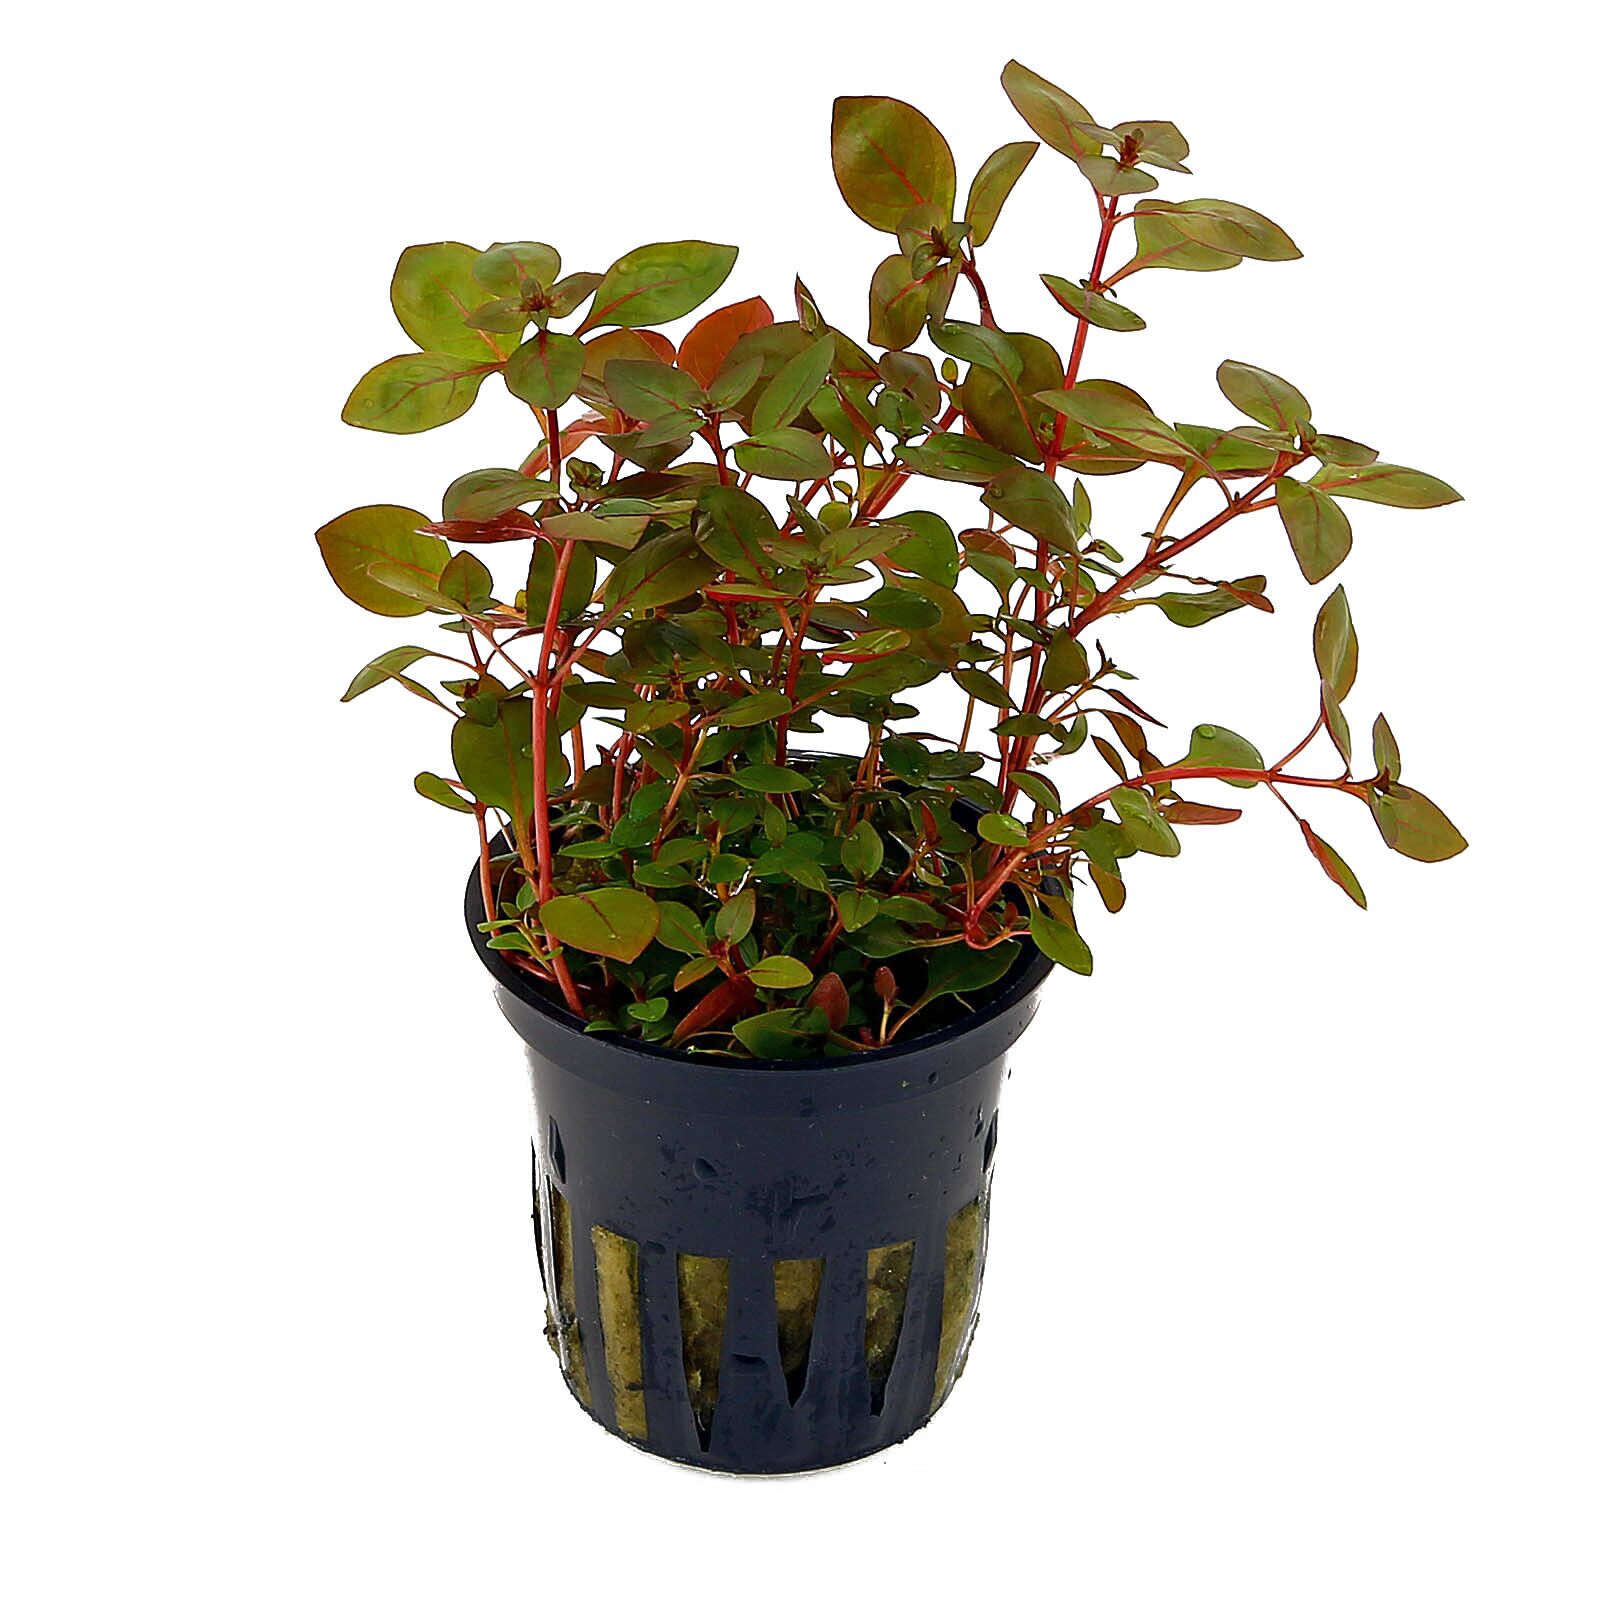 Skraldespand London Duke Ludwigia palustris "Super Red" - pot | Aquasabi - Aquascaping Shop